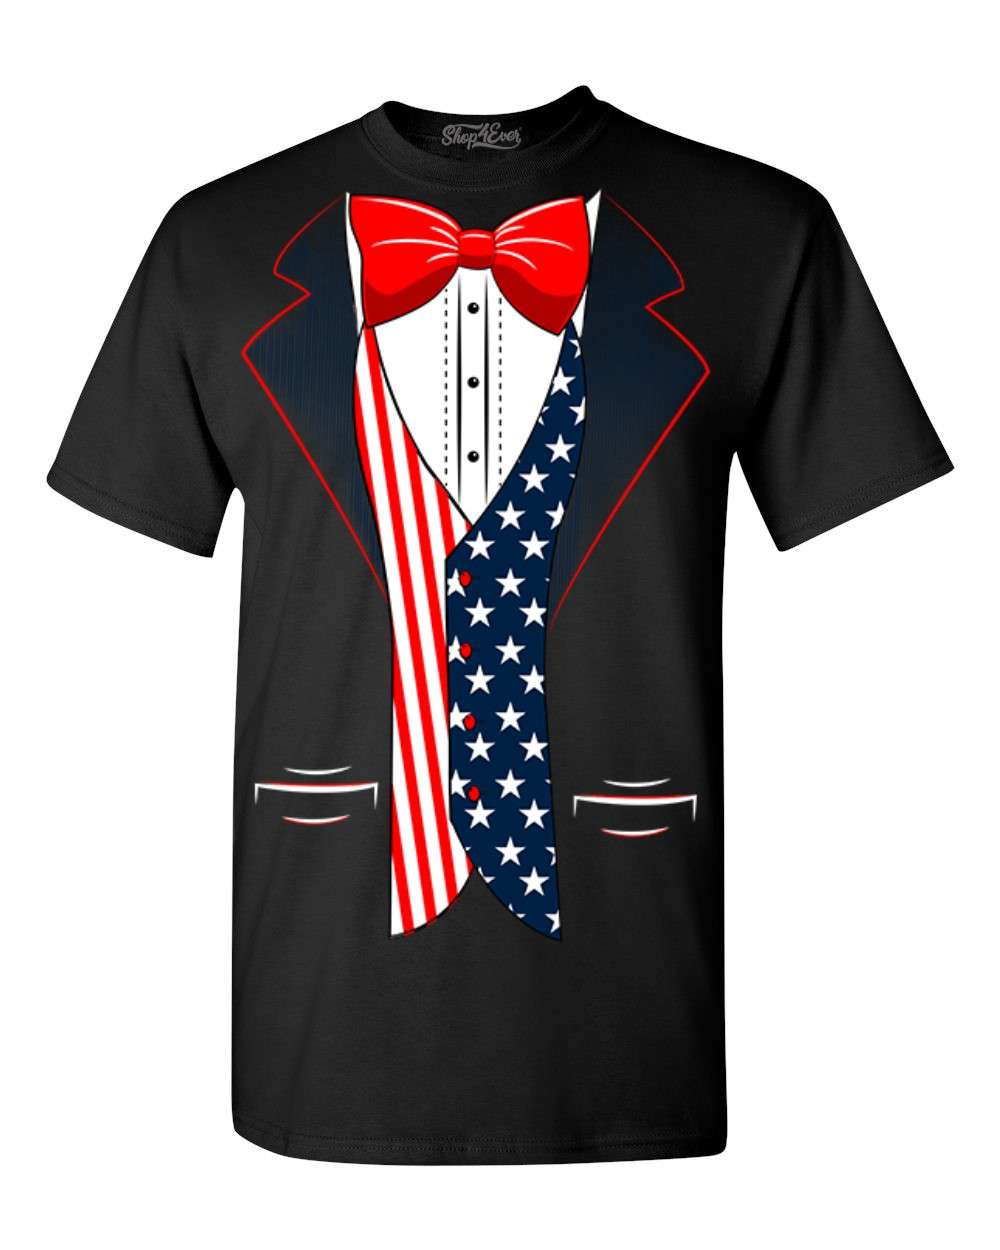 USA Tuxedo Patriotic 4th of July Men's T-shirt 